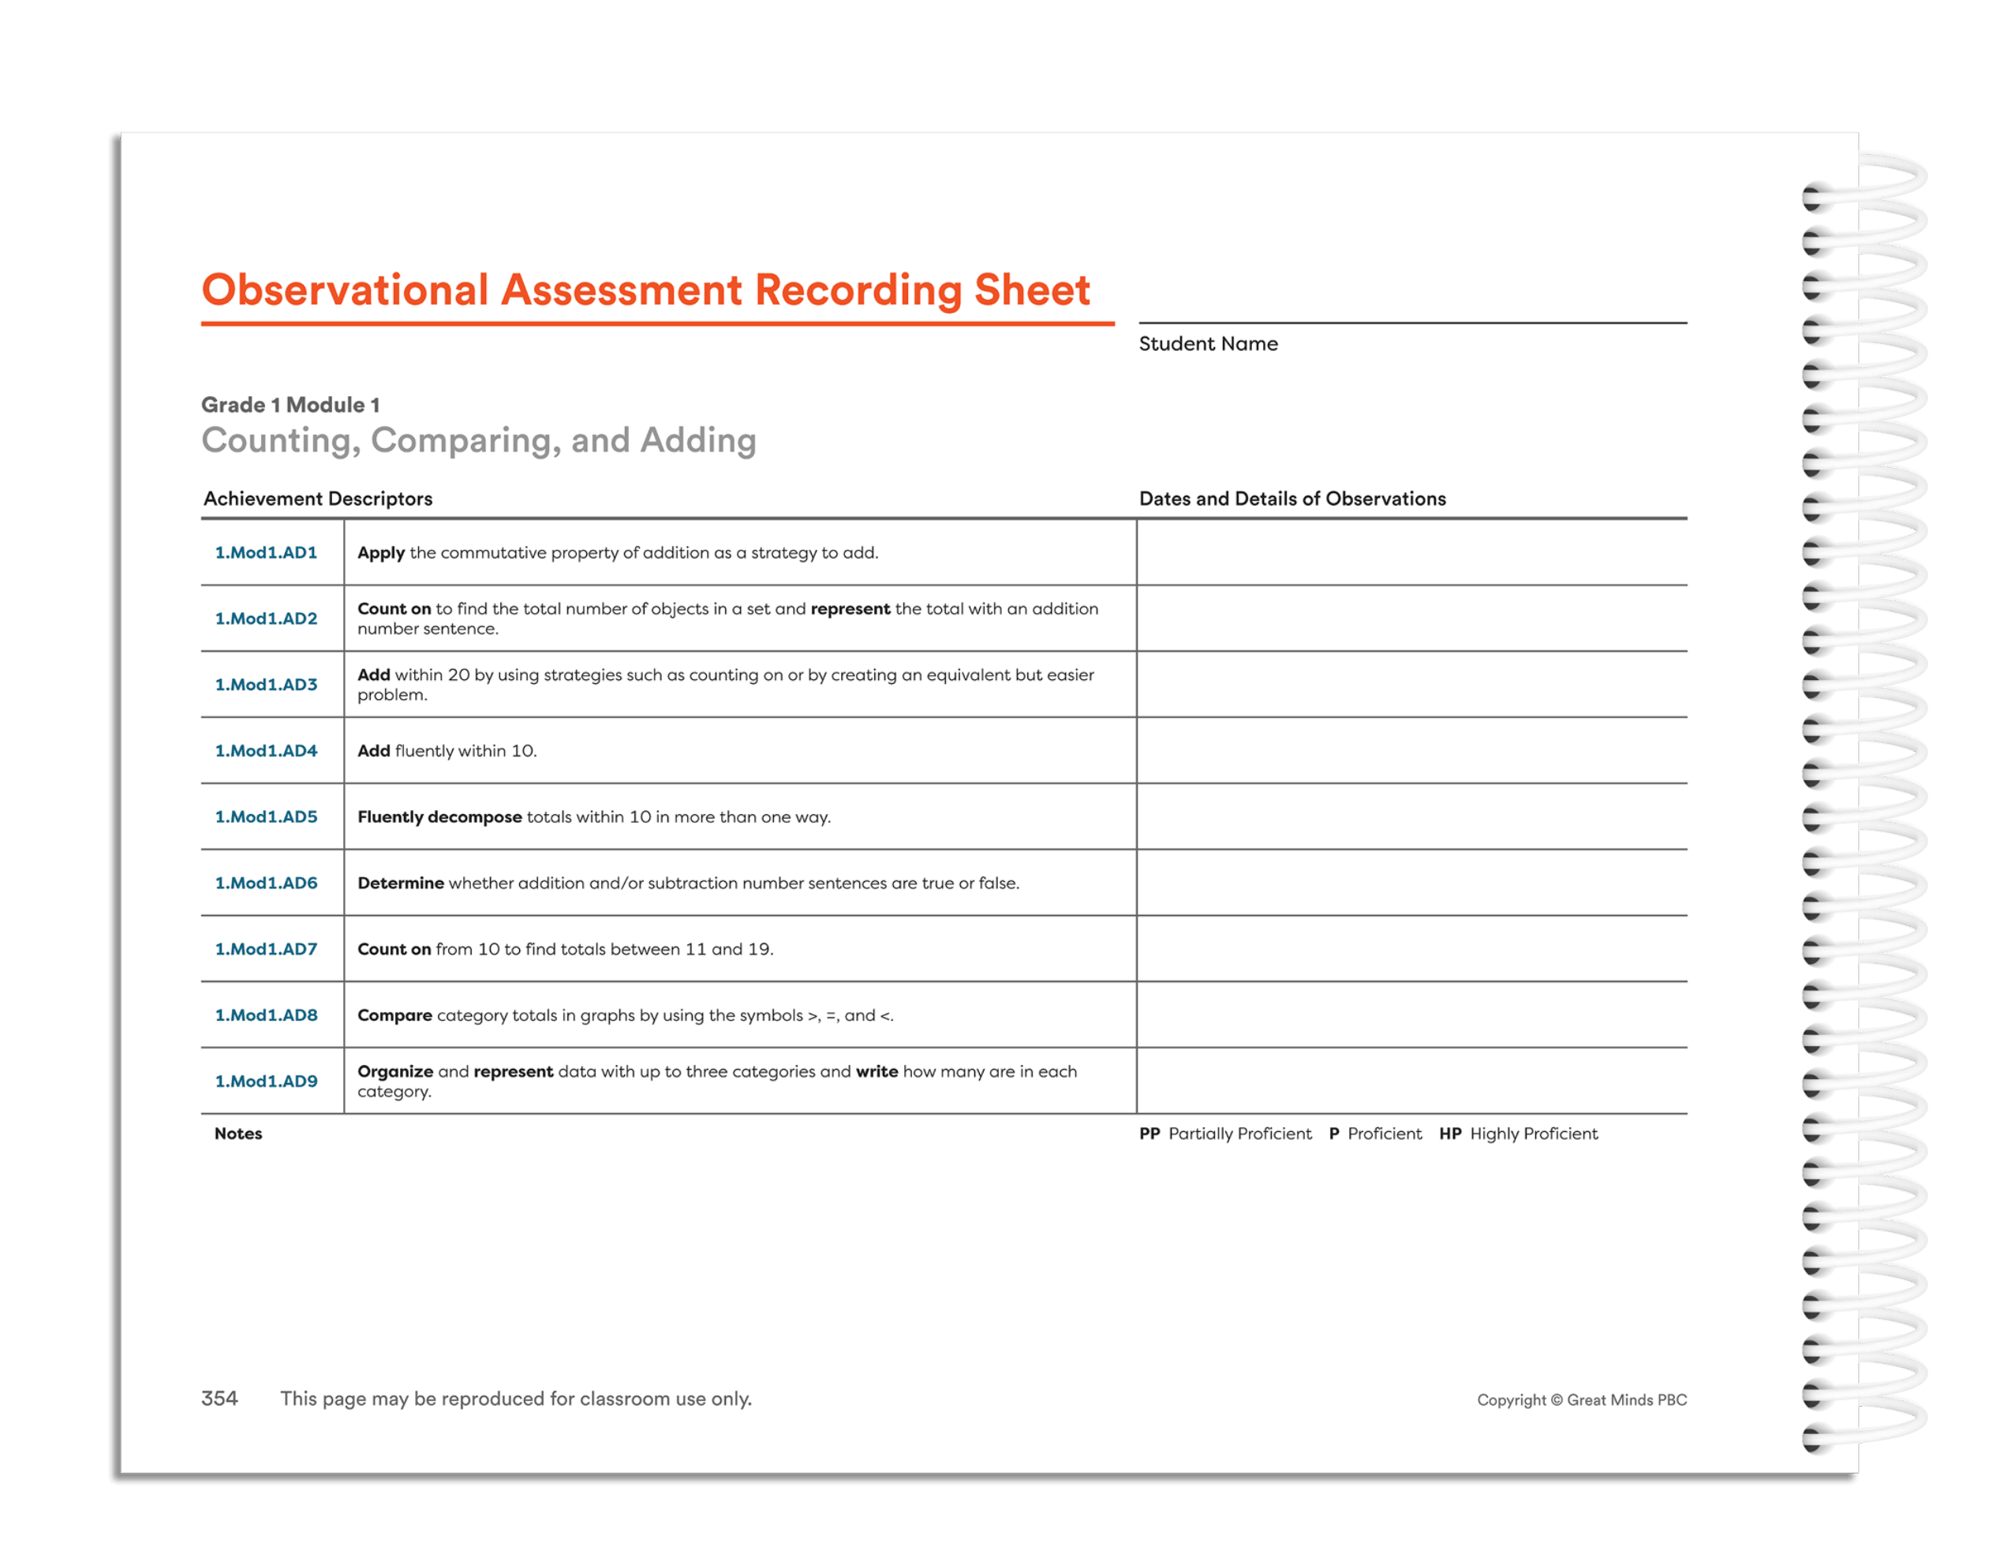 TE-EM2-Observational Assessment Recording Sheet